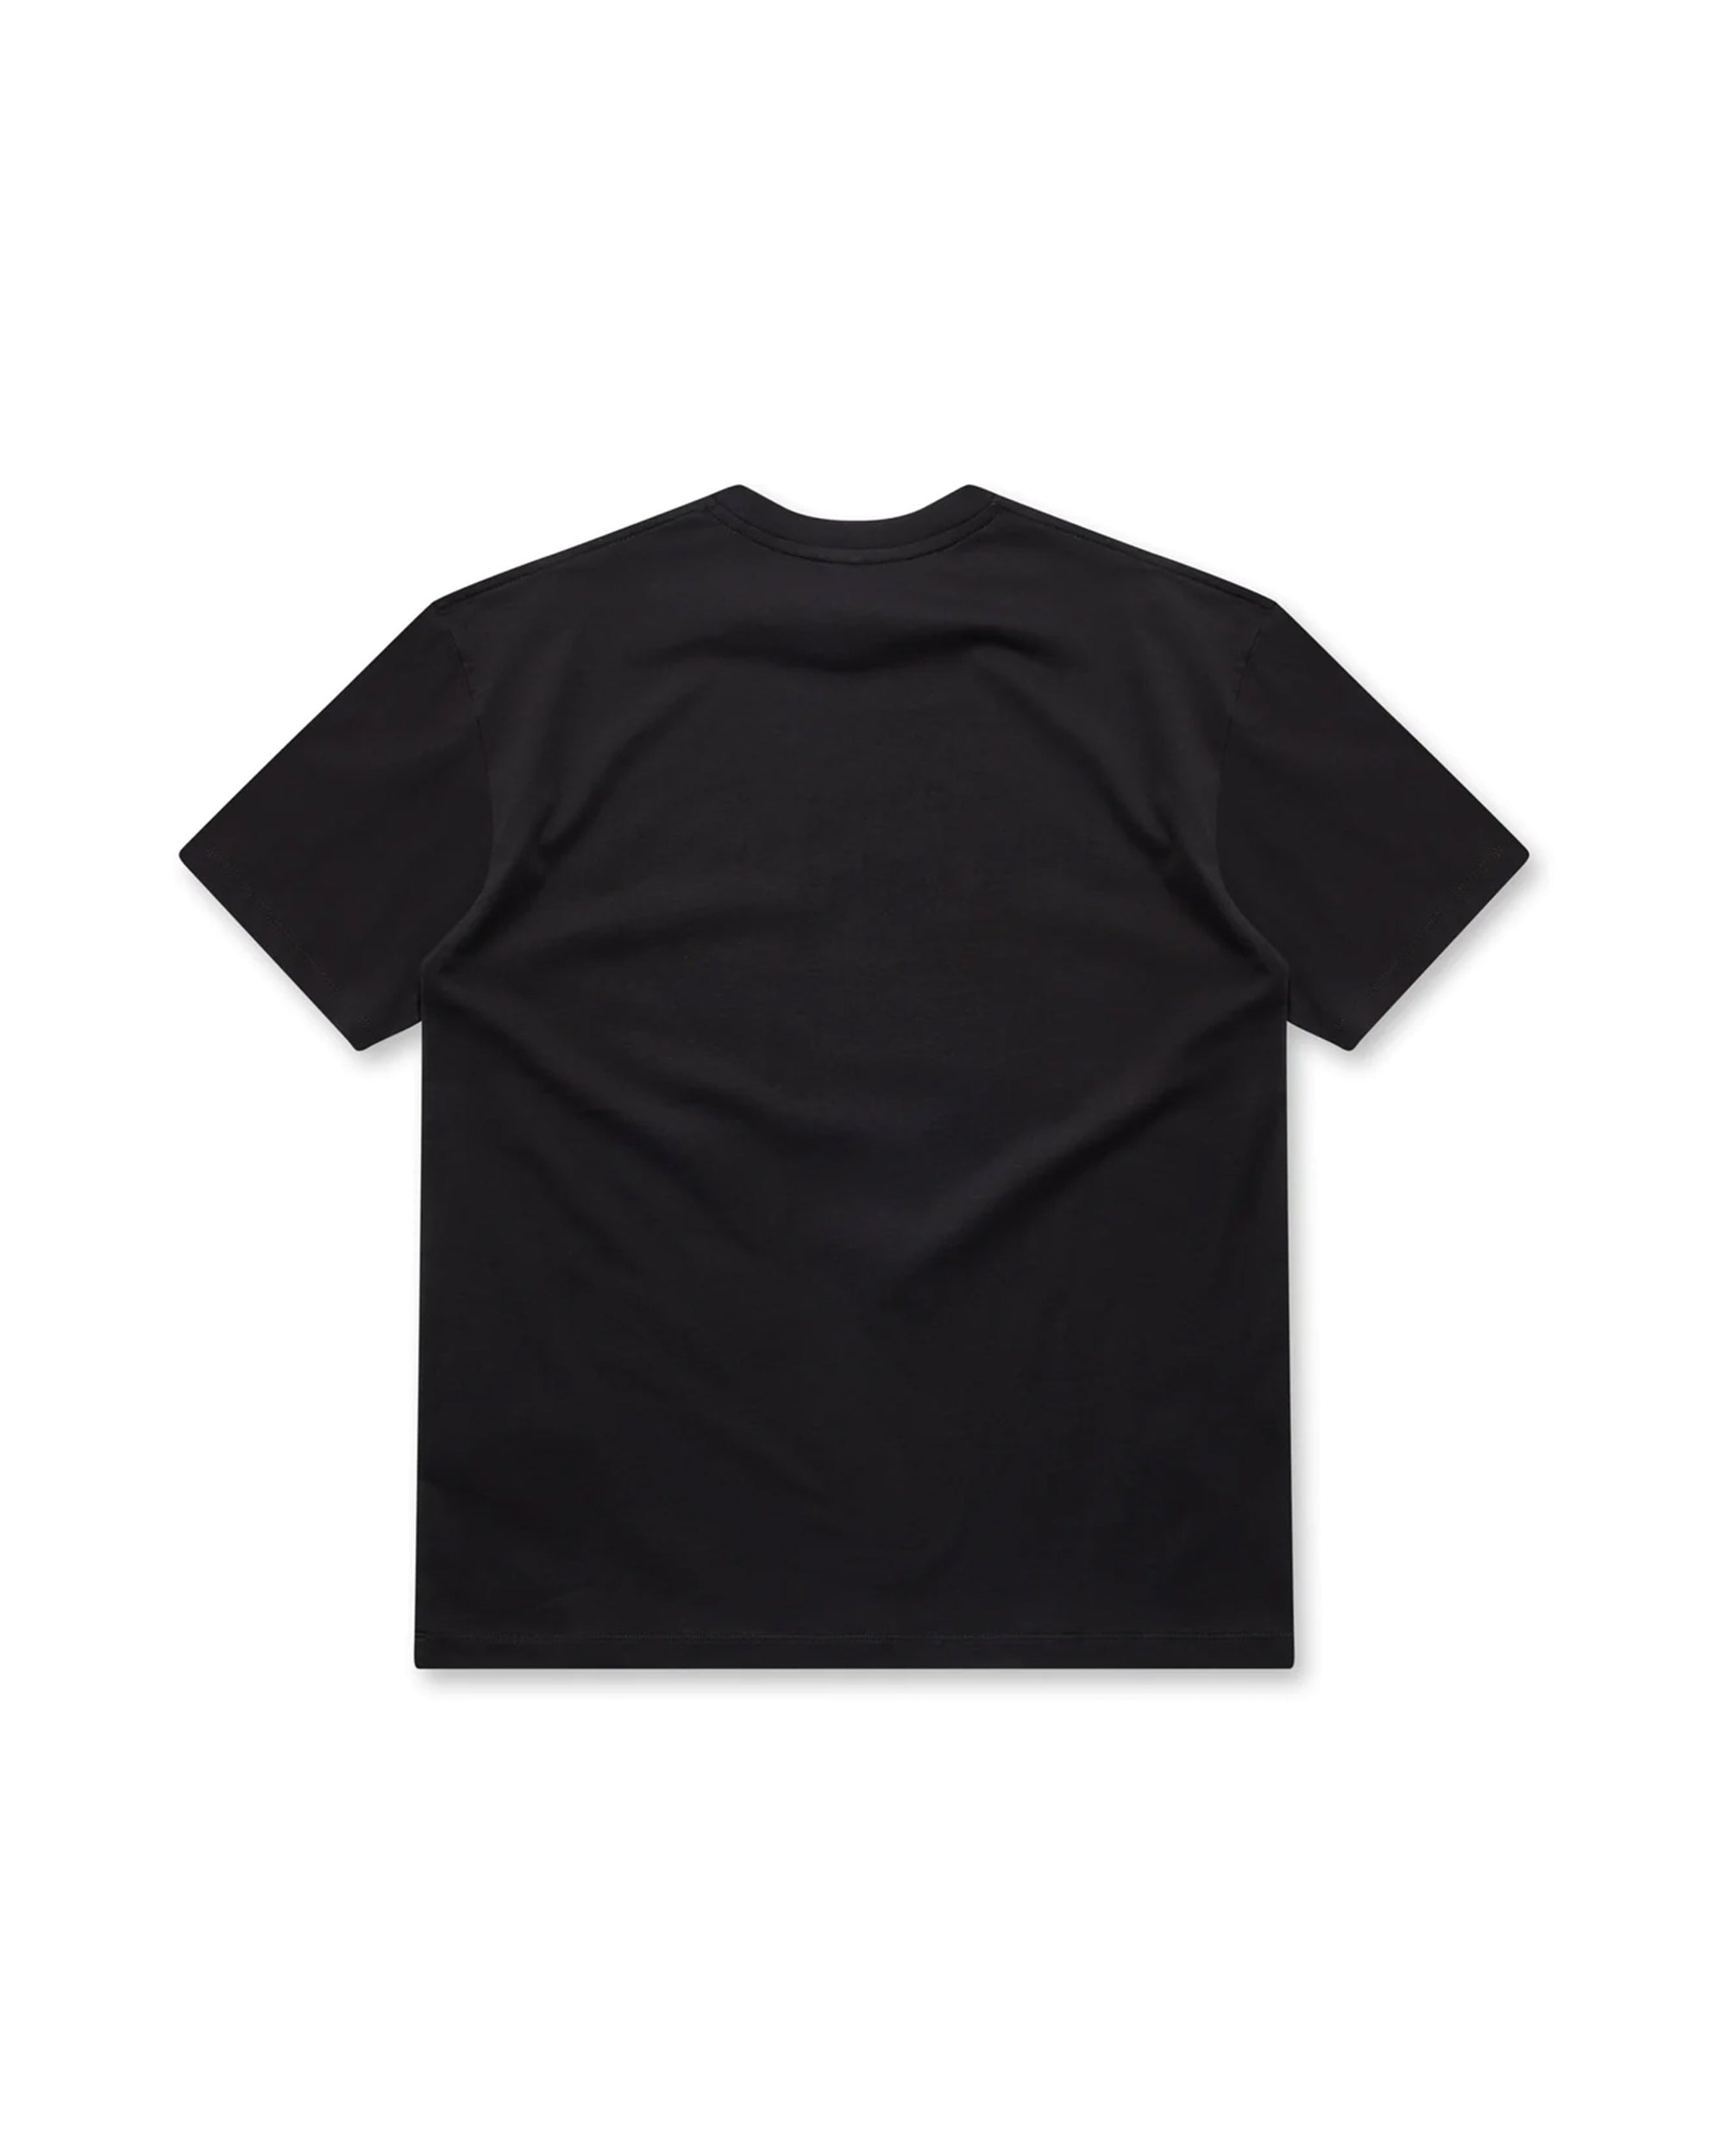 Ally Bo Graphic T-shirt - Black